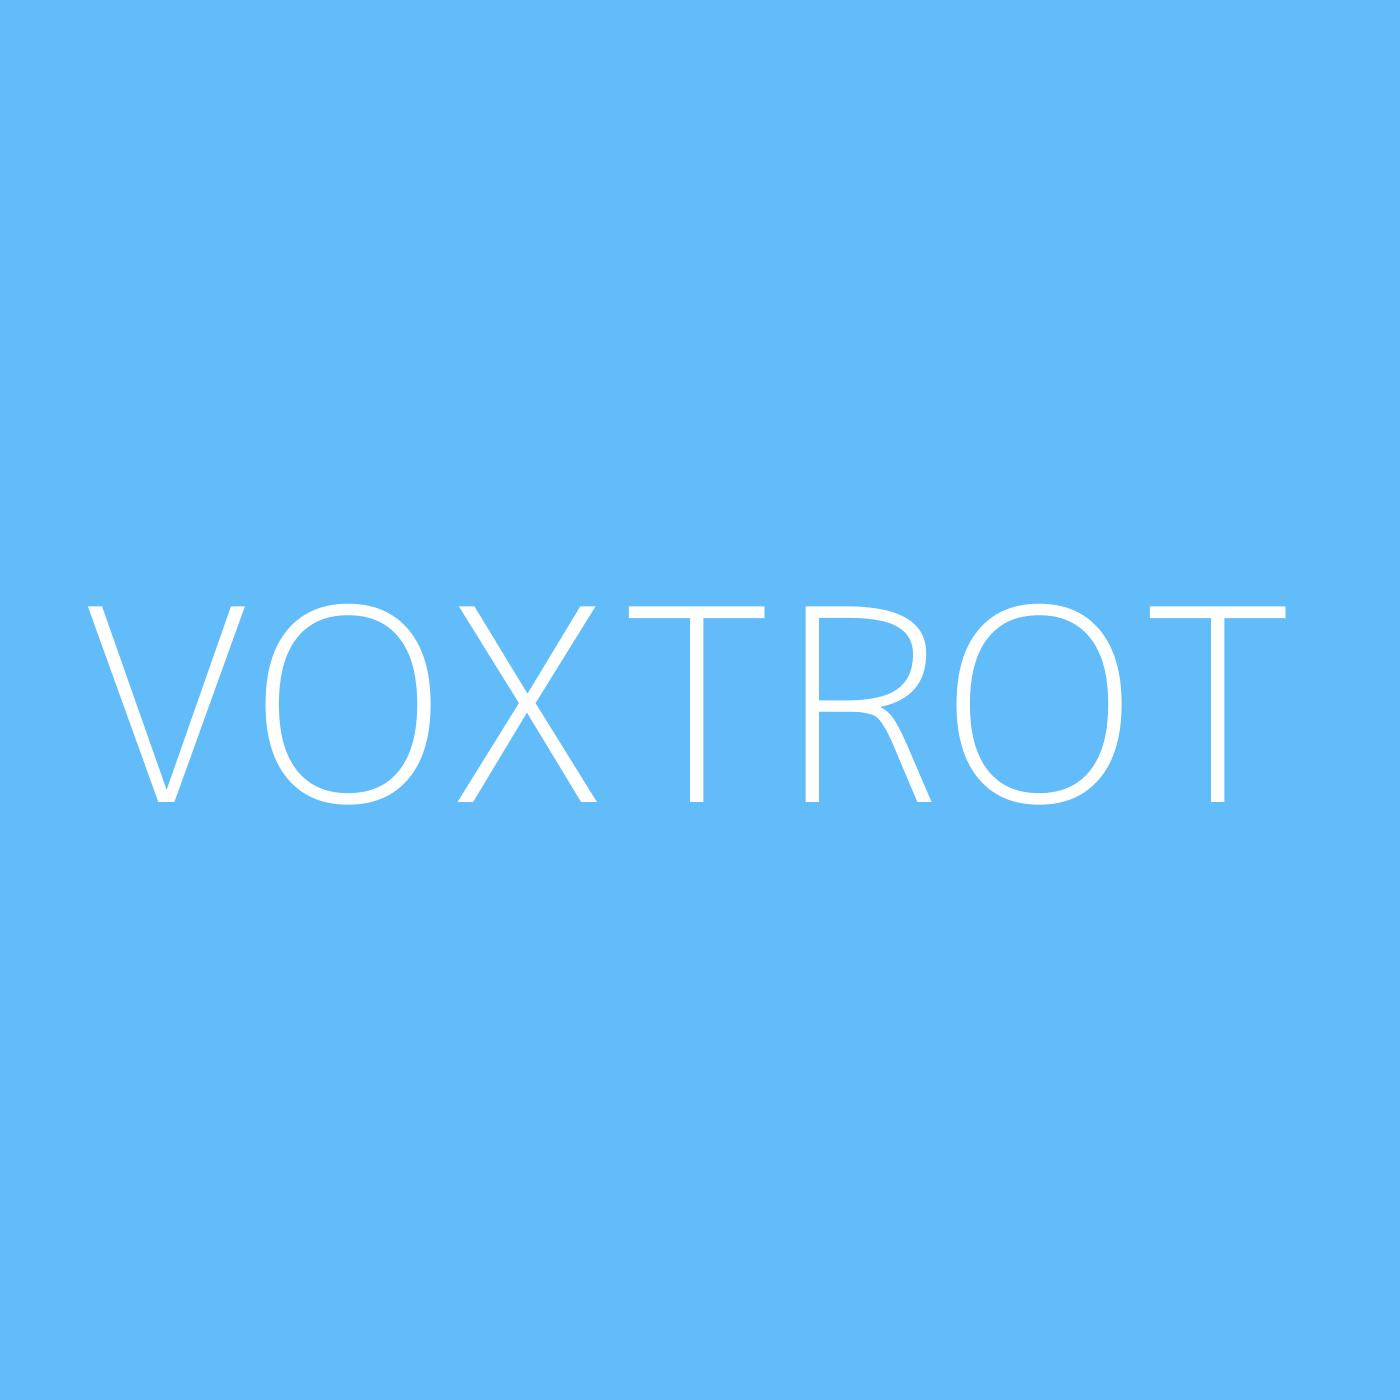 Voxtrot Playlist Artwork